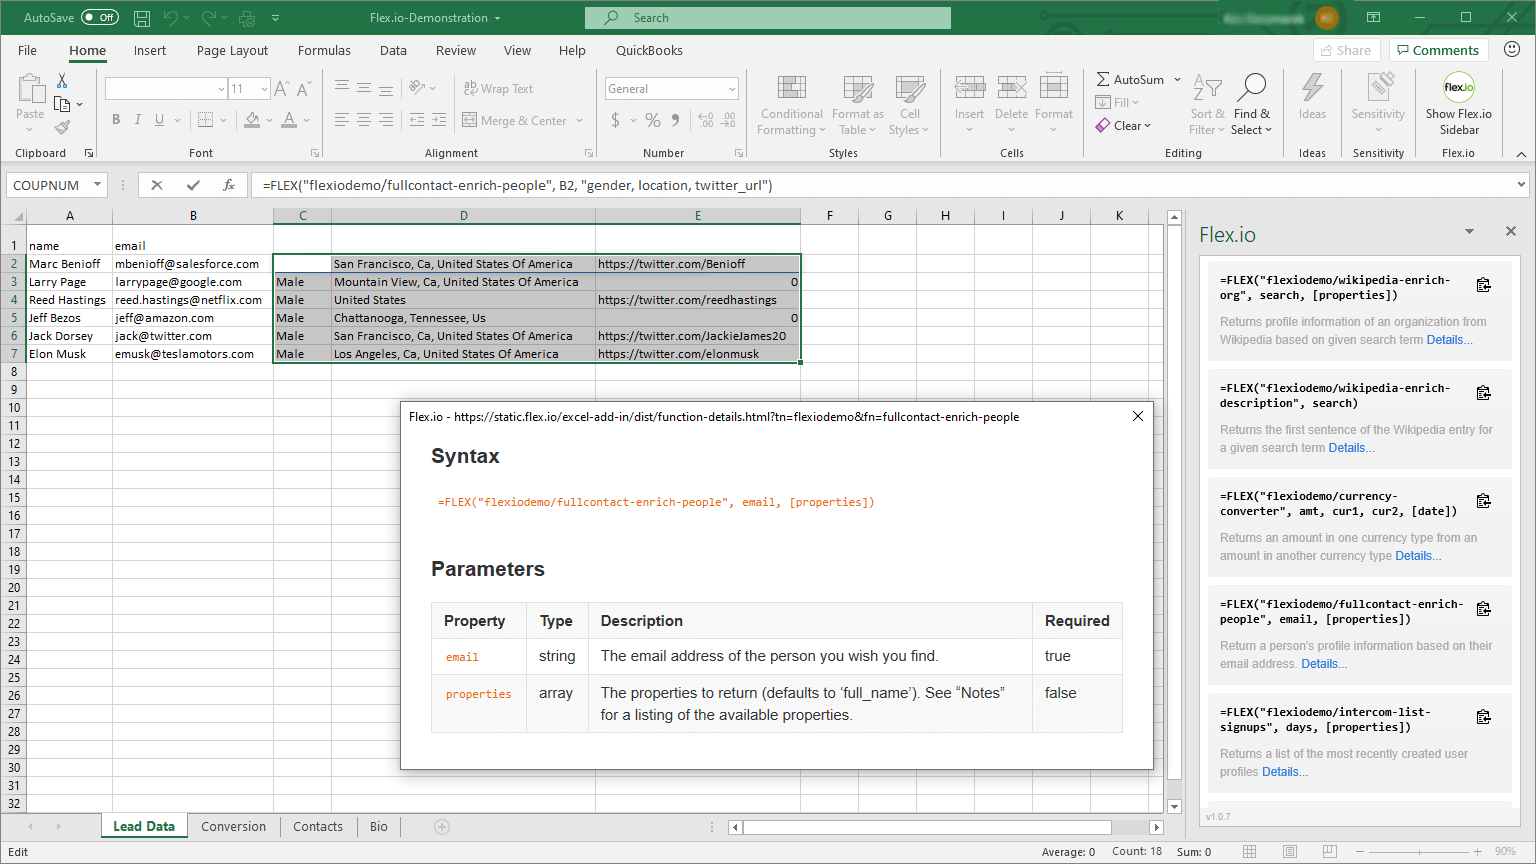 Using the Flex.io Excel Add-in